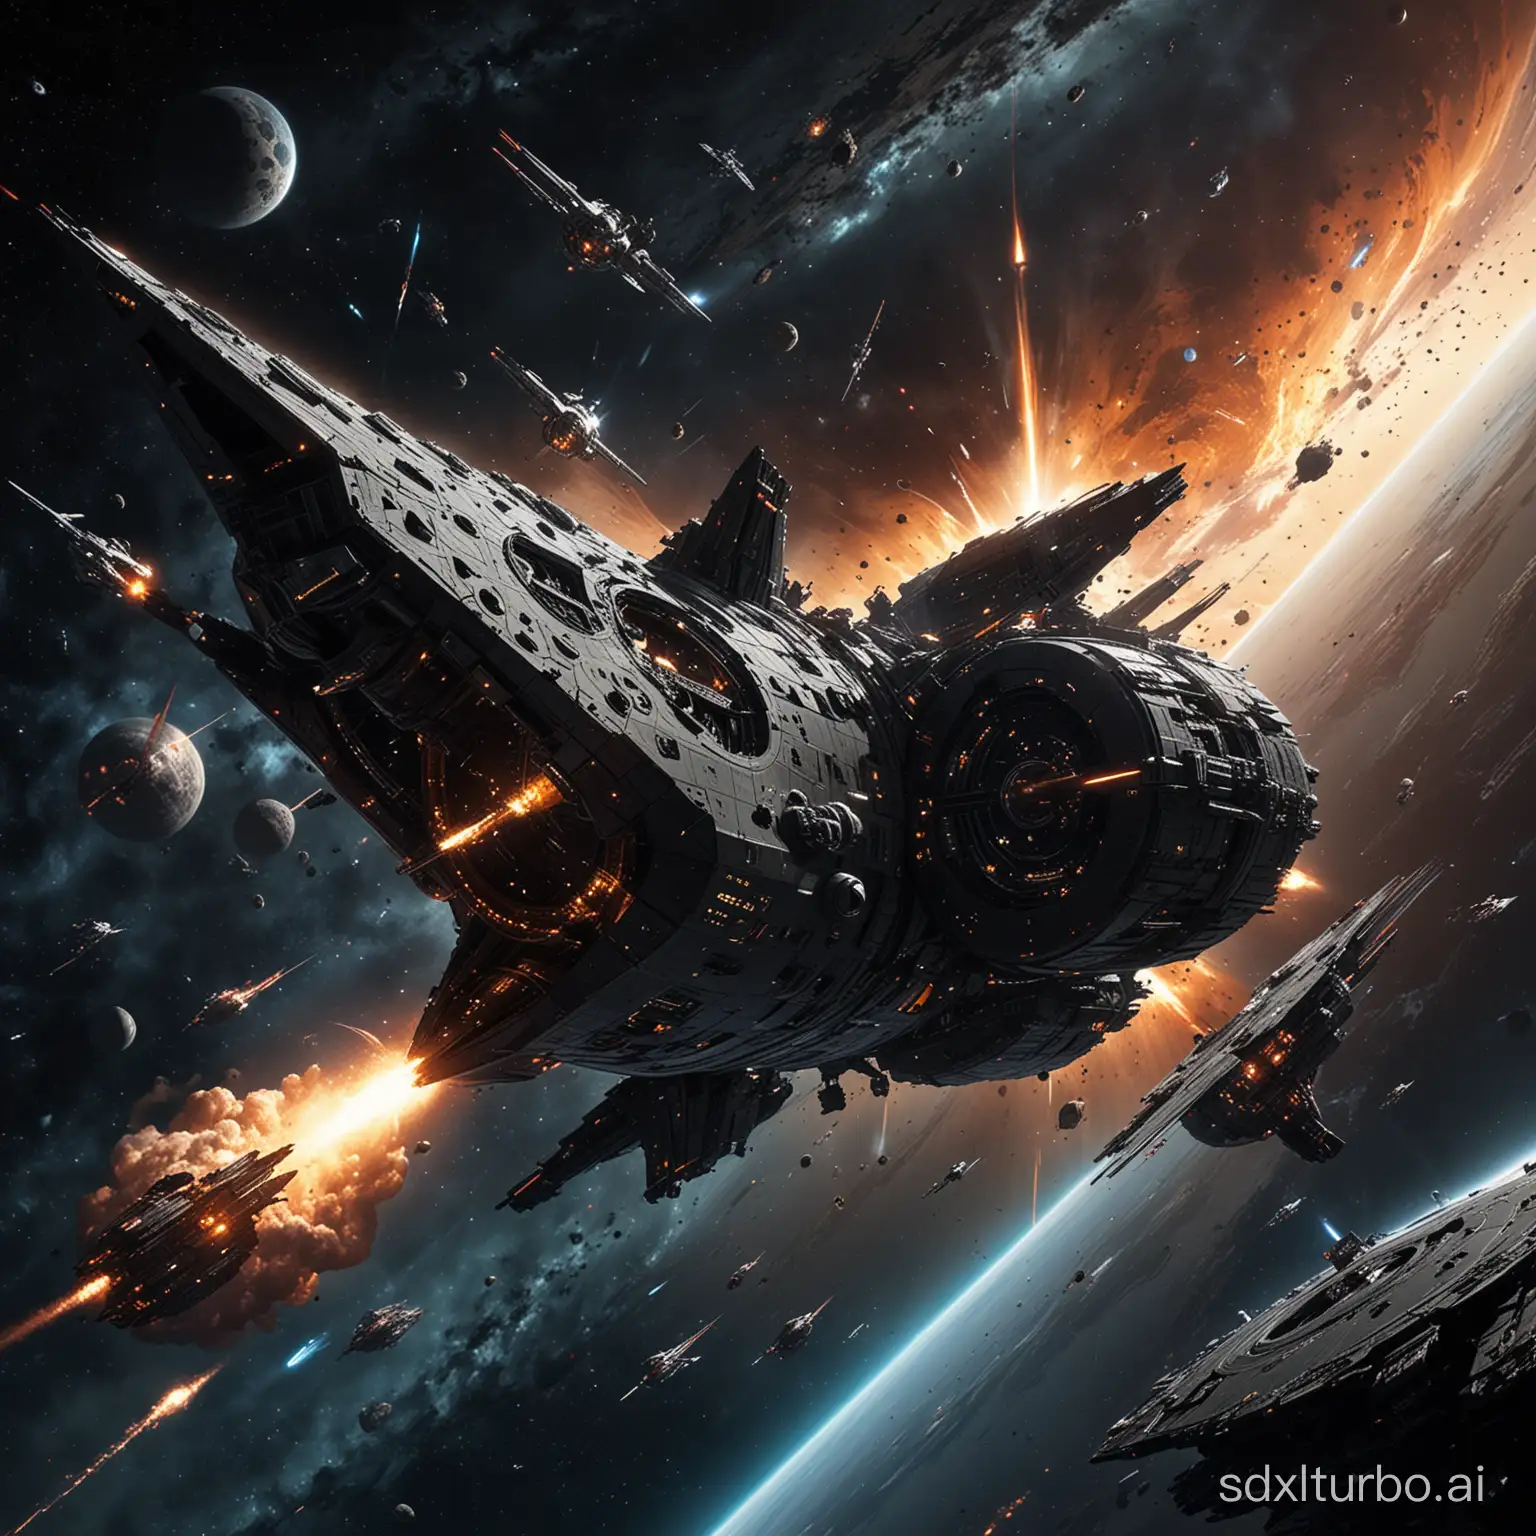 Epic-Space-Battle-Hubobalipopotrototo-Craft-in-Cosmic-Combat